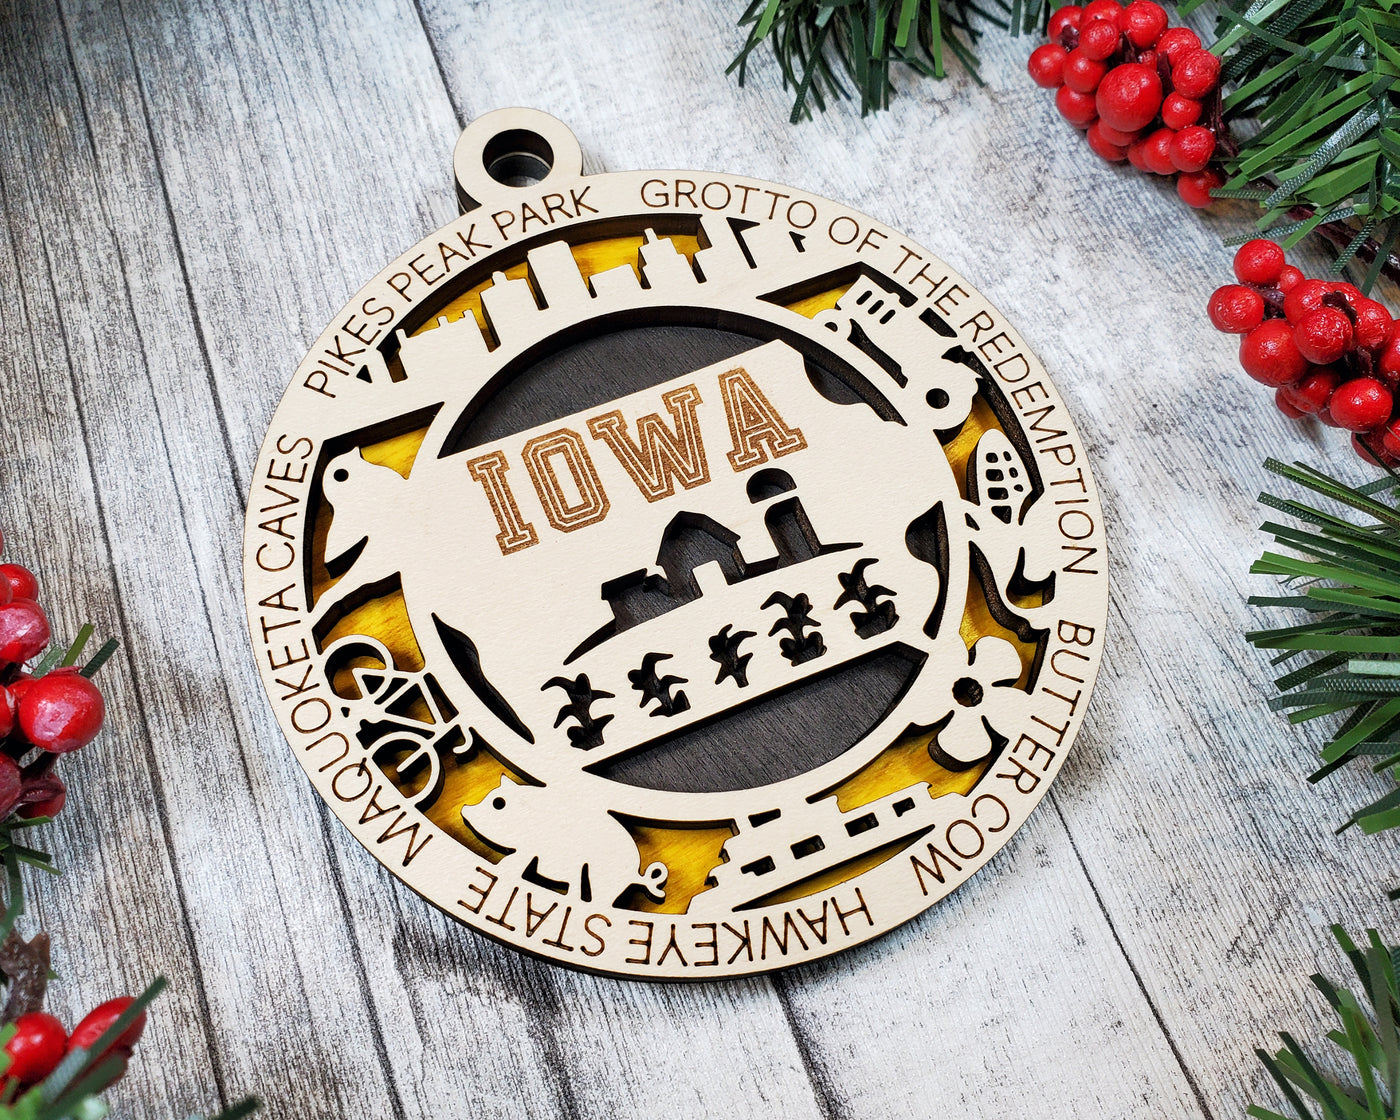 State Ornaments - Iowa